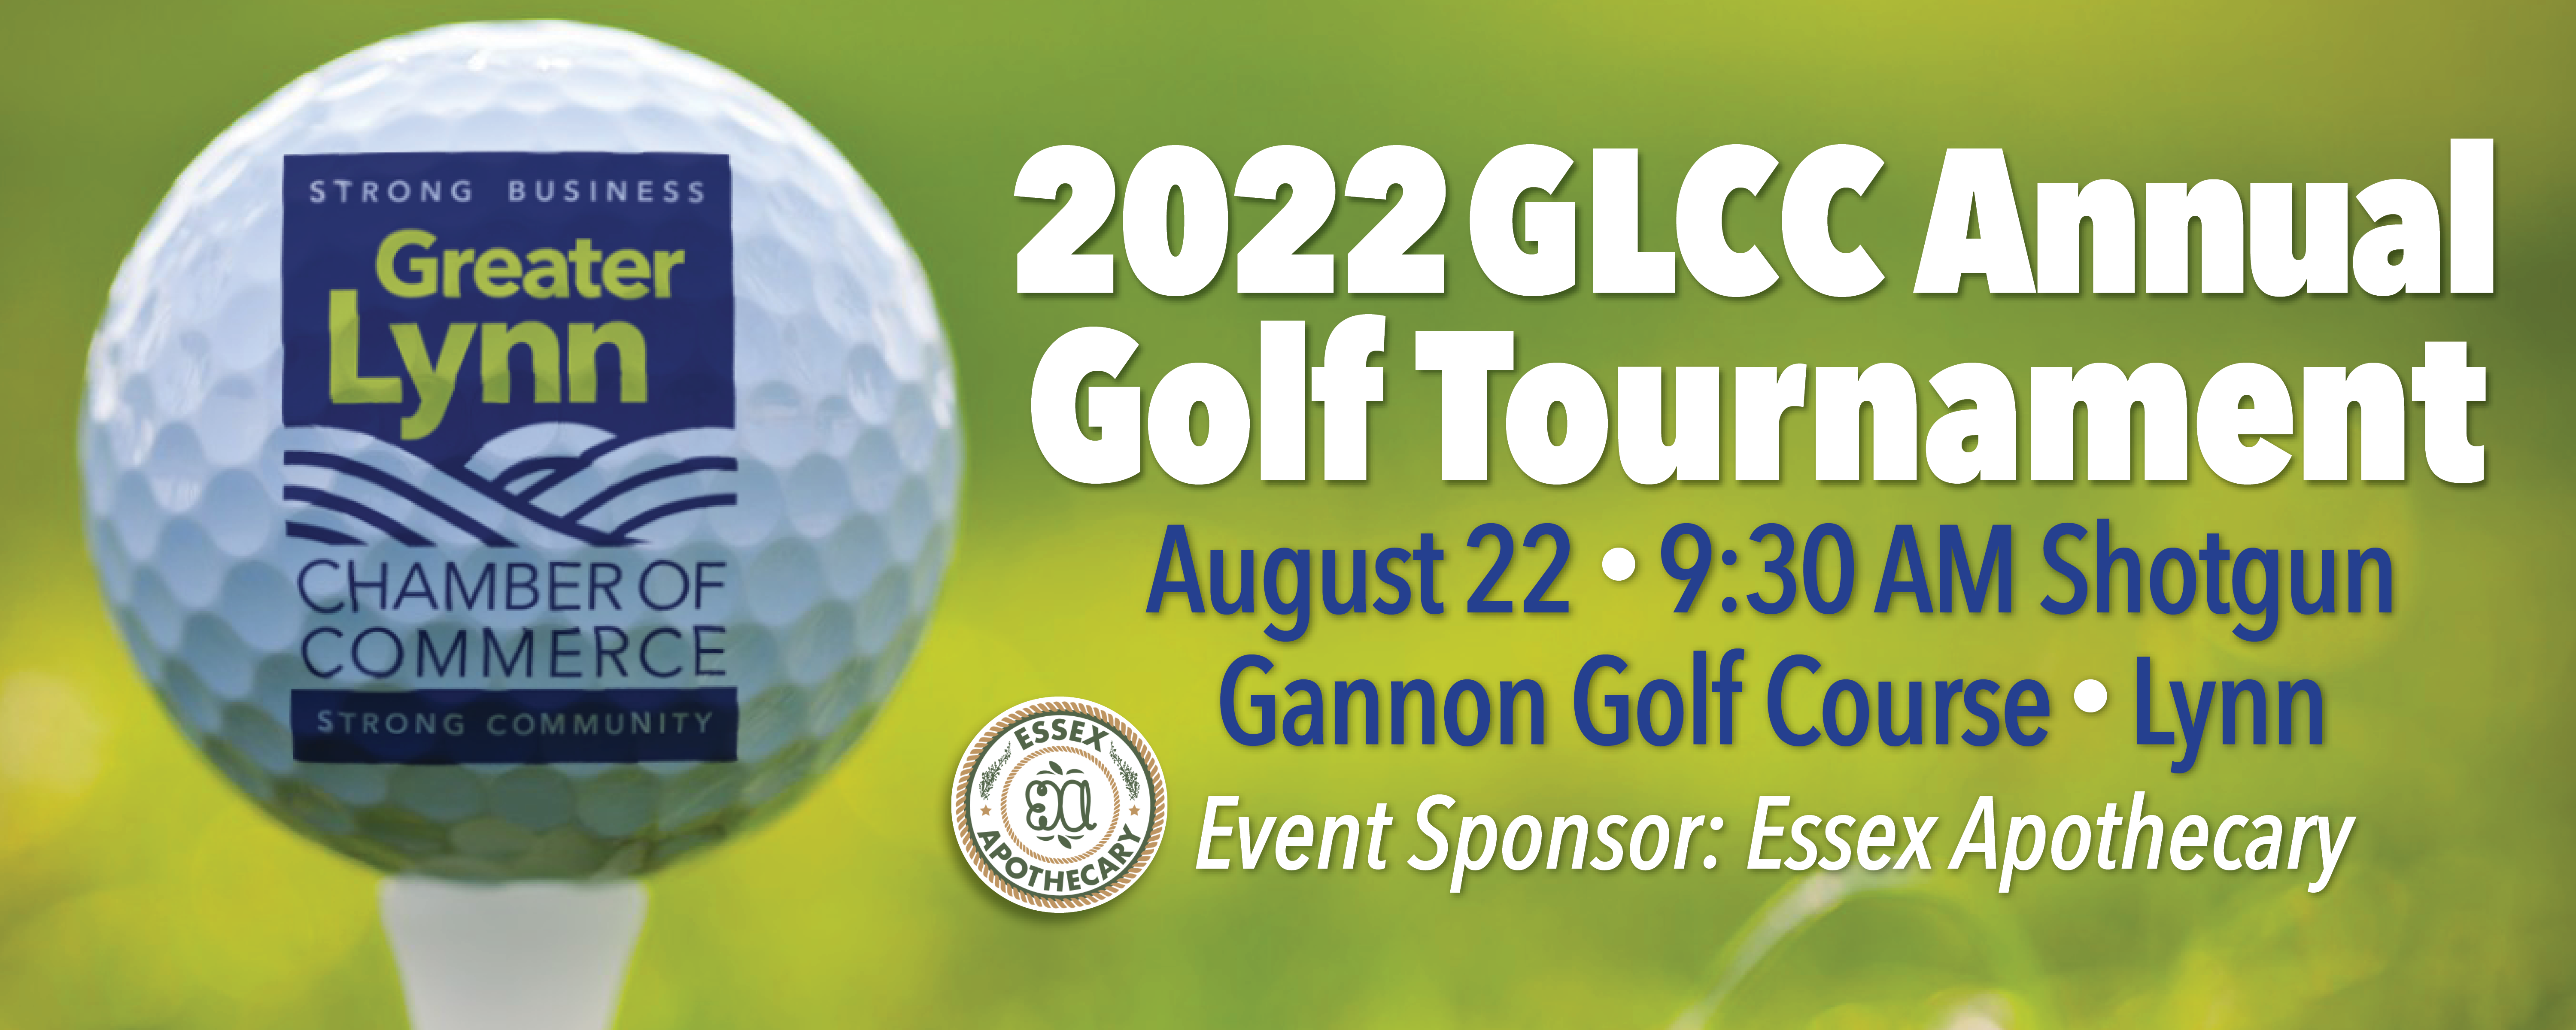 2022 Golf Tournament - Greater Lynn Chamber of Commerce